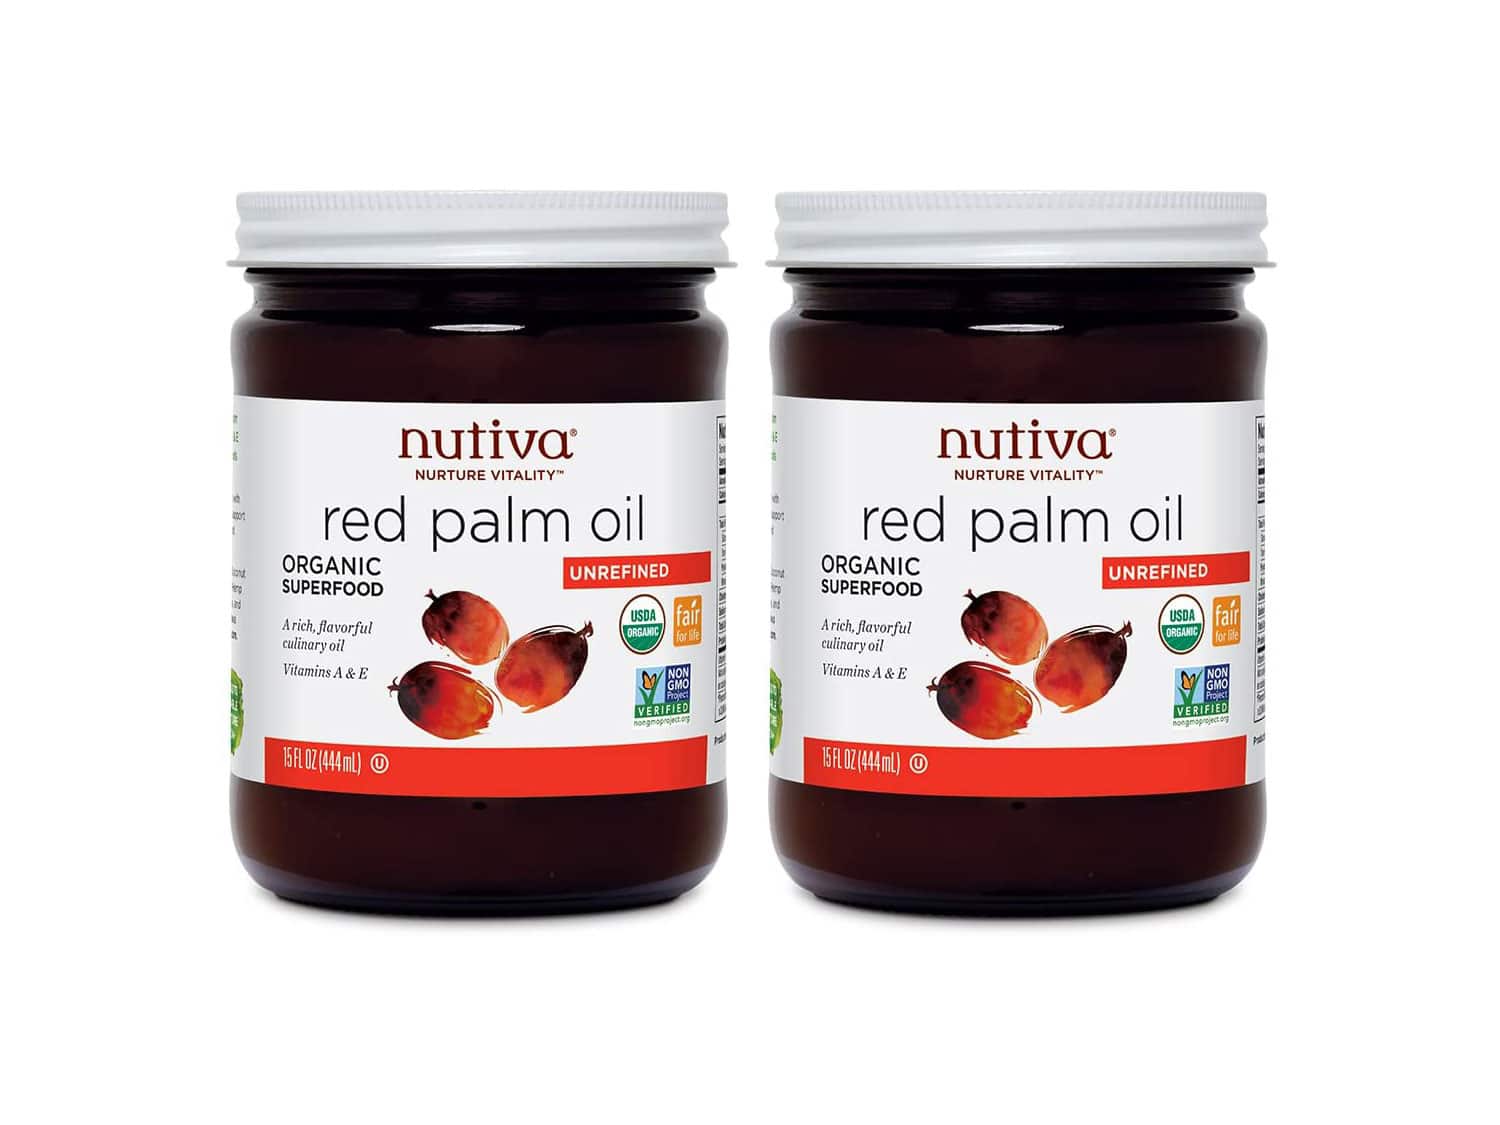 Nutiva USDA Certified Organic, non-GMO, Cold-Filtered, Unrefined, Fair Trade Ecuadorian Red Palm Oil, 15 Ounce (Pack of 2)